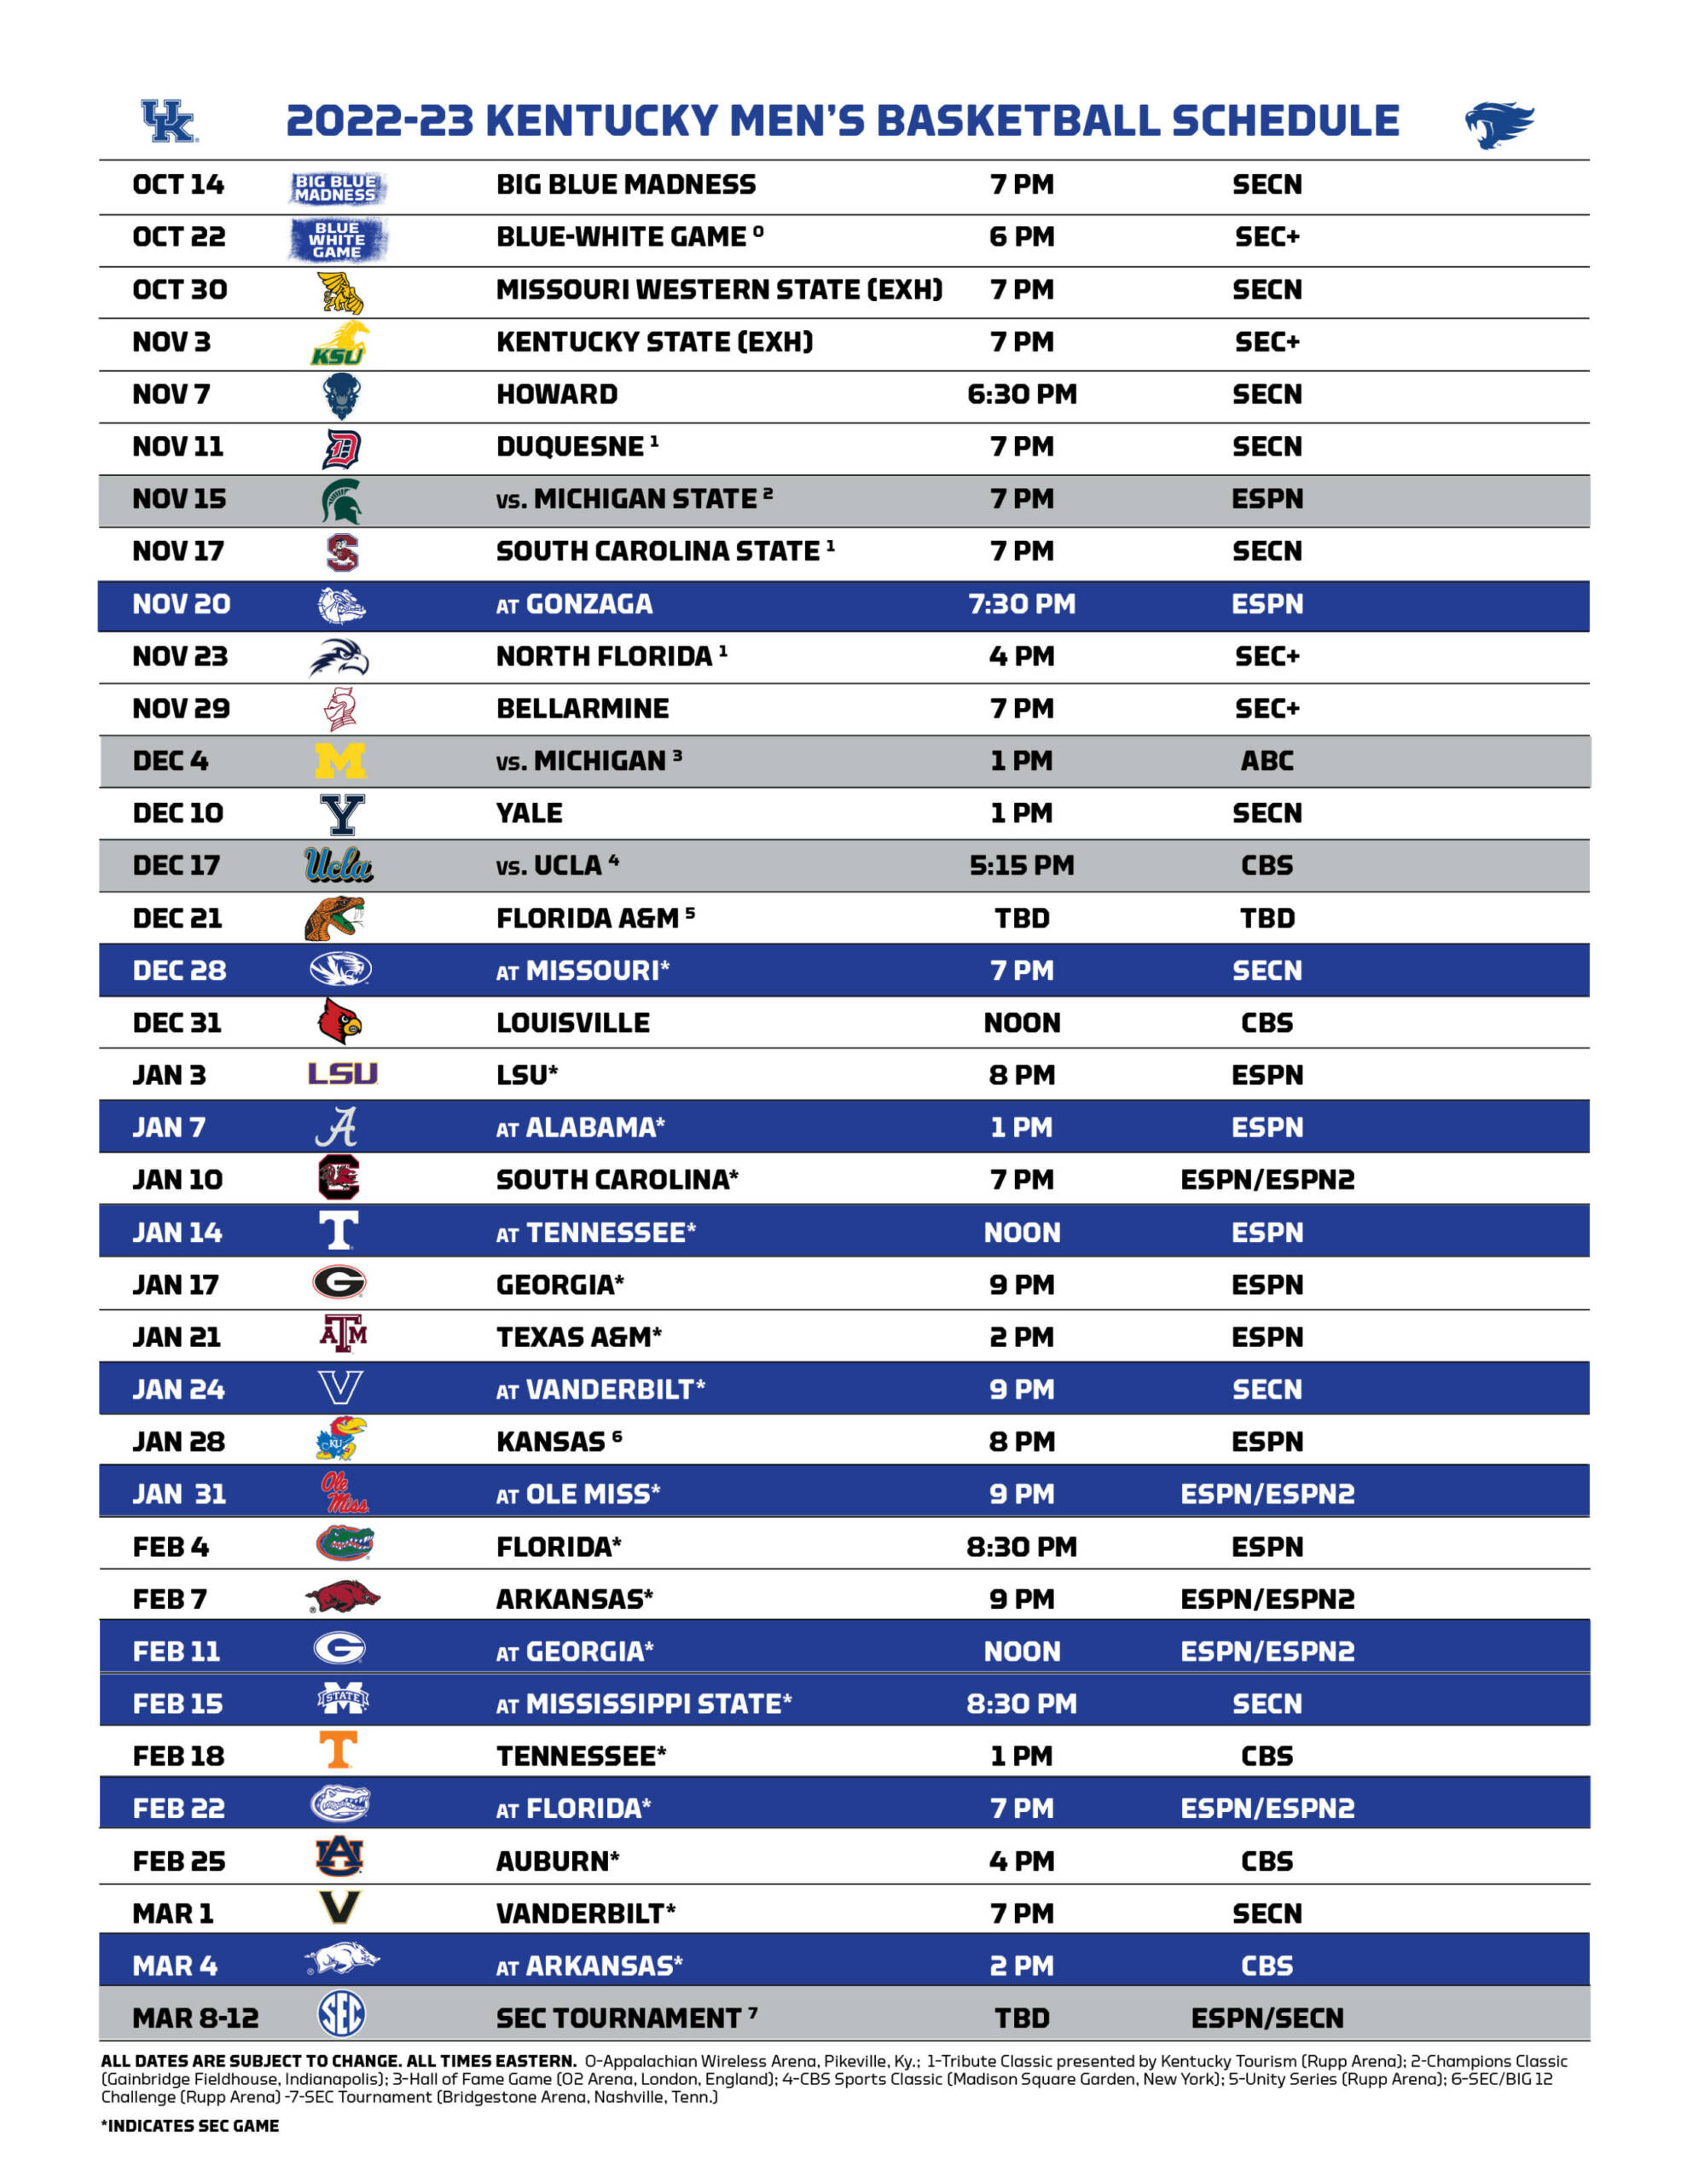 Full 2022 23 UK Men s Basketball Schedule Set UK Athletics